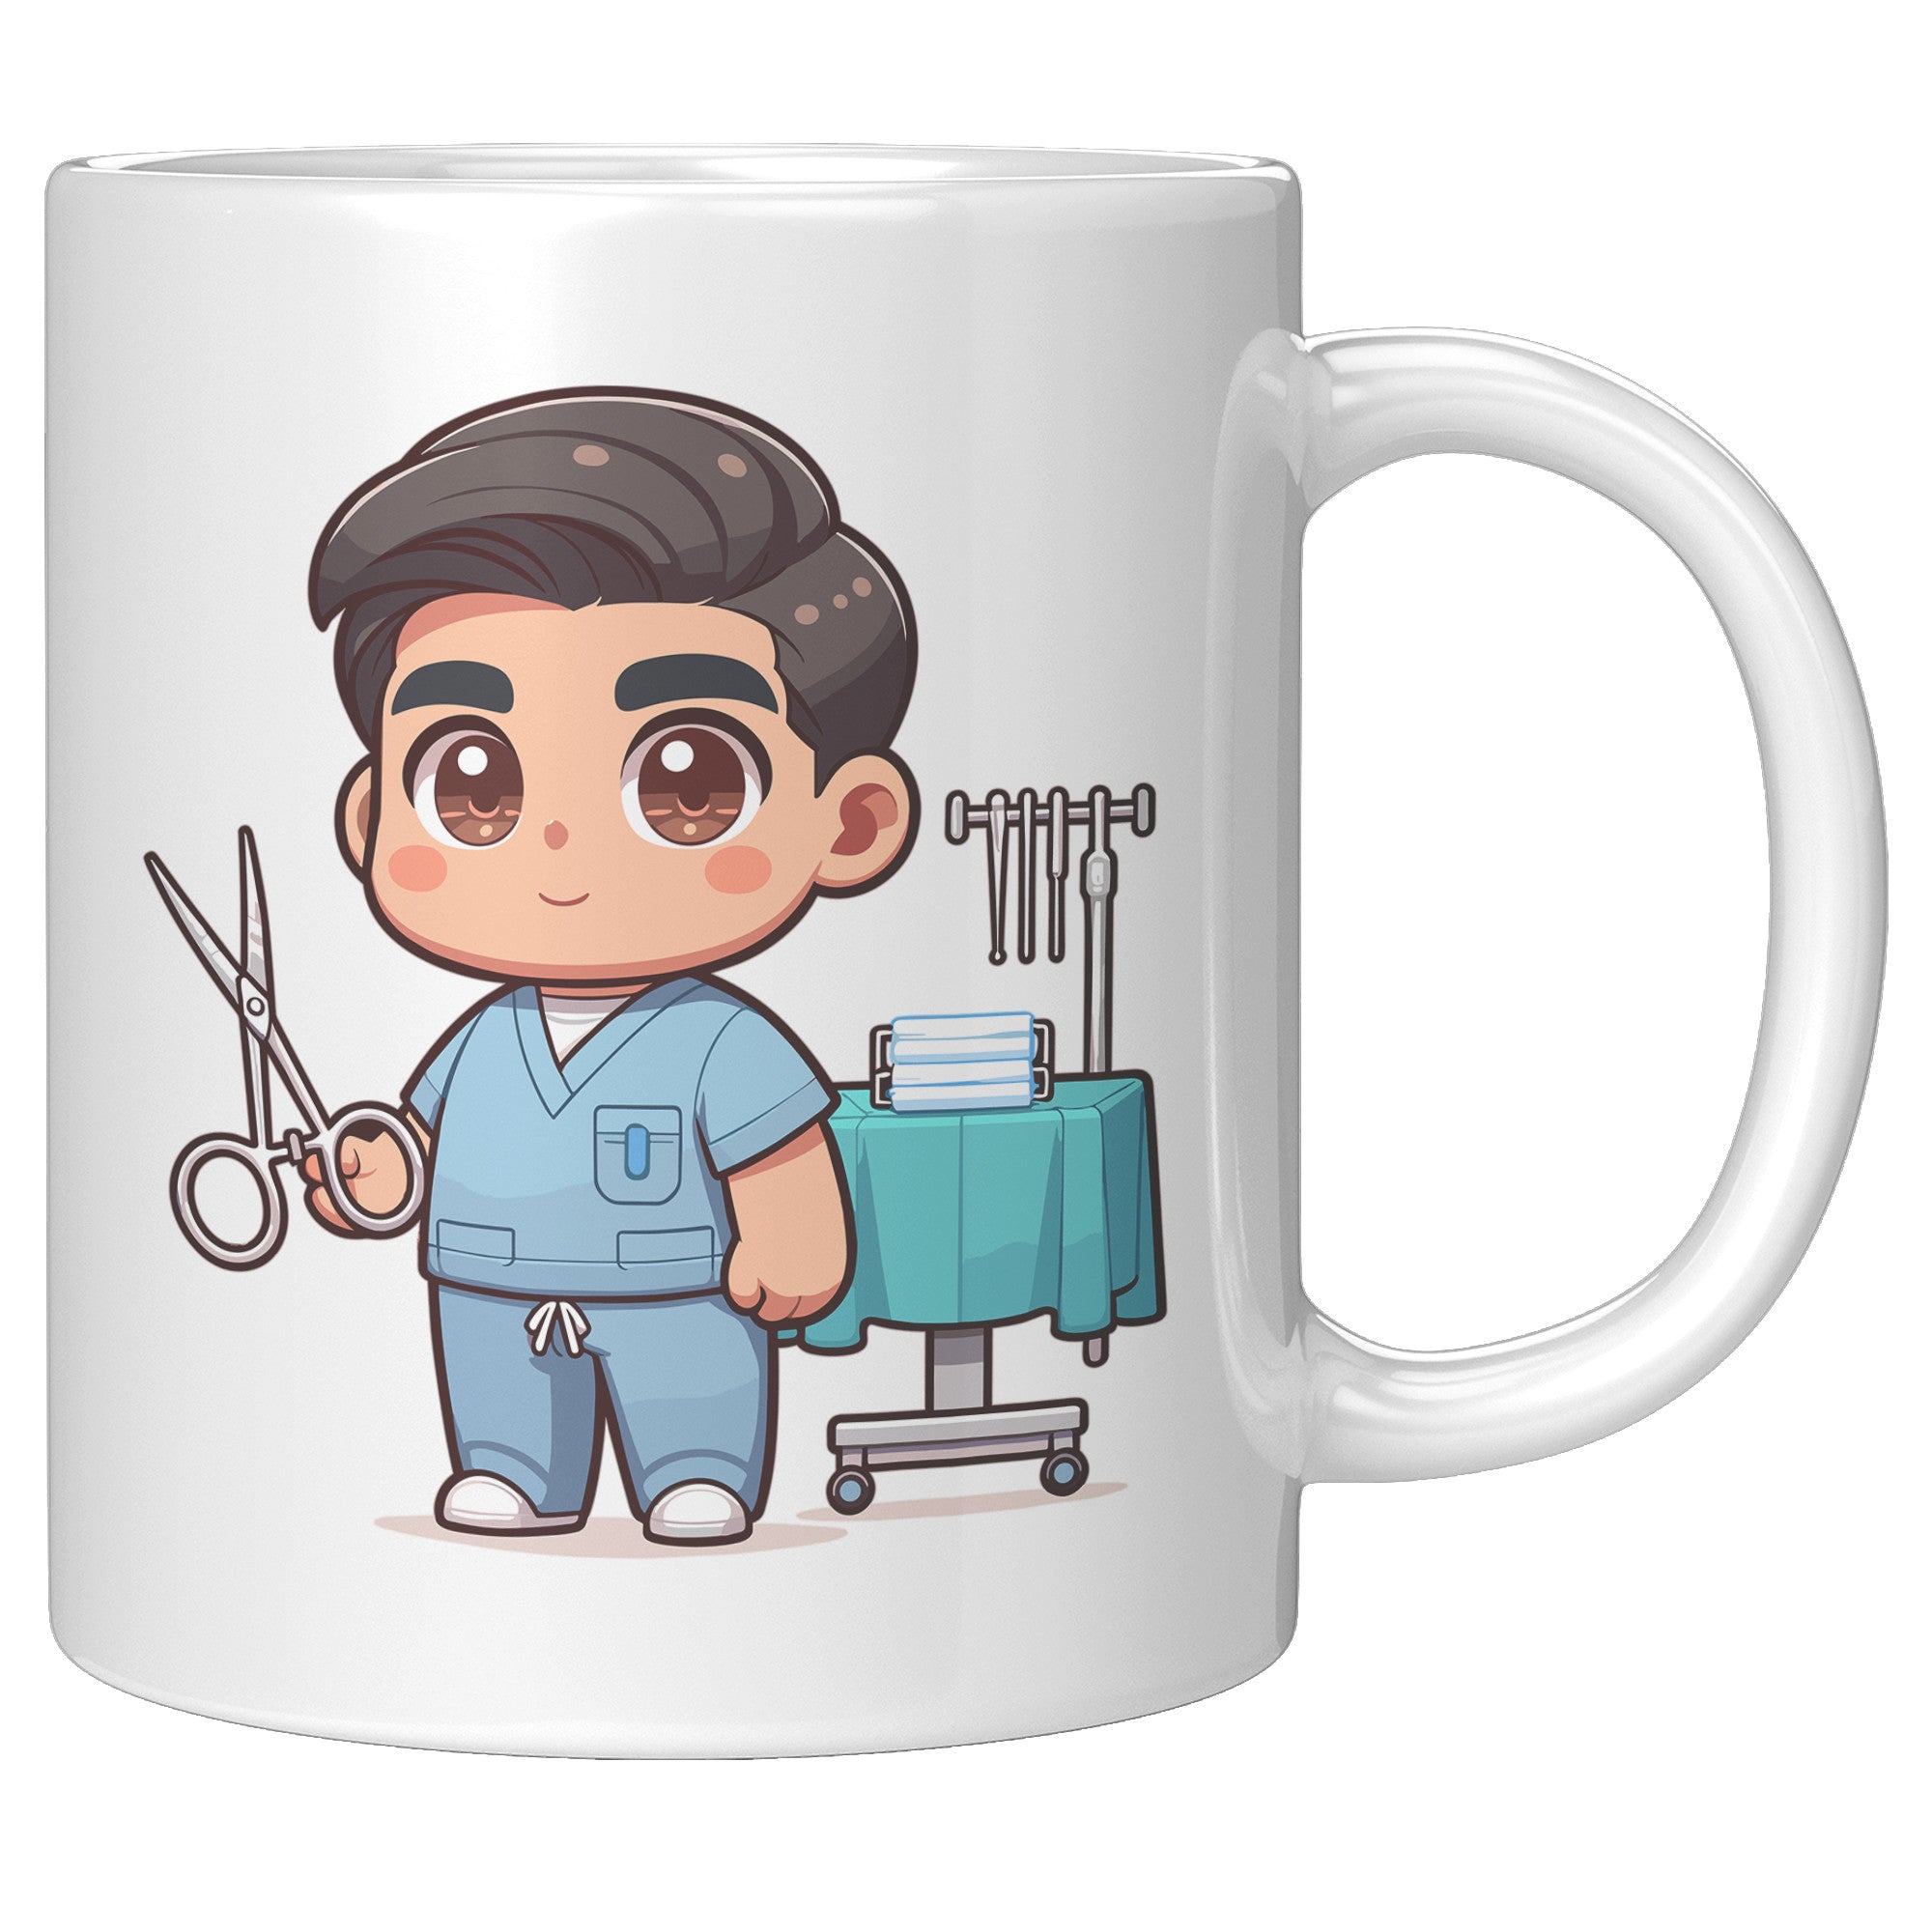 11 oz Custom RN Nurse Gift Coffee Mug - Cute Cartoon Nurse Design - Perfect for Nurse's Day, Birthdays, Graduations - Durable & Fun Mug for Everyday Heroes